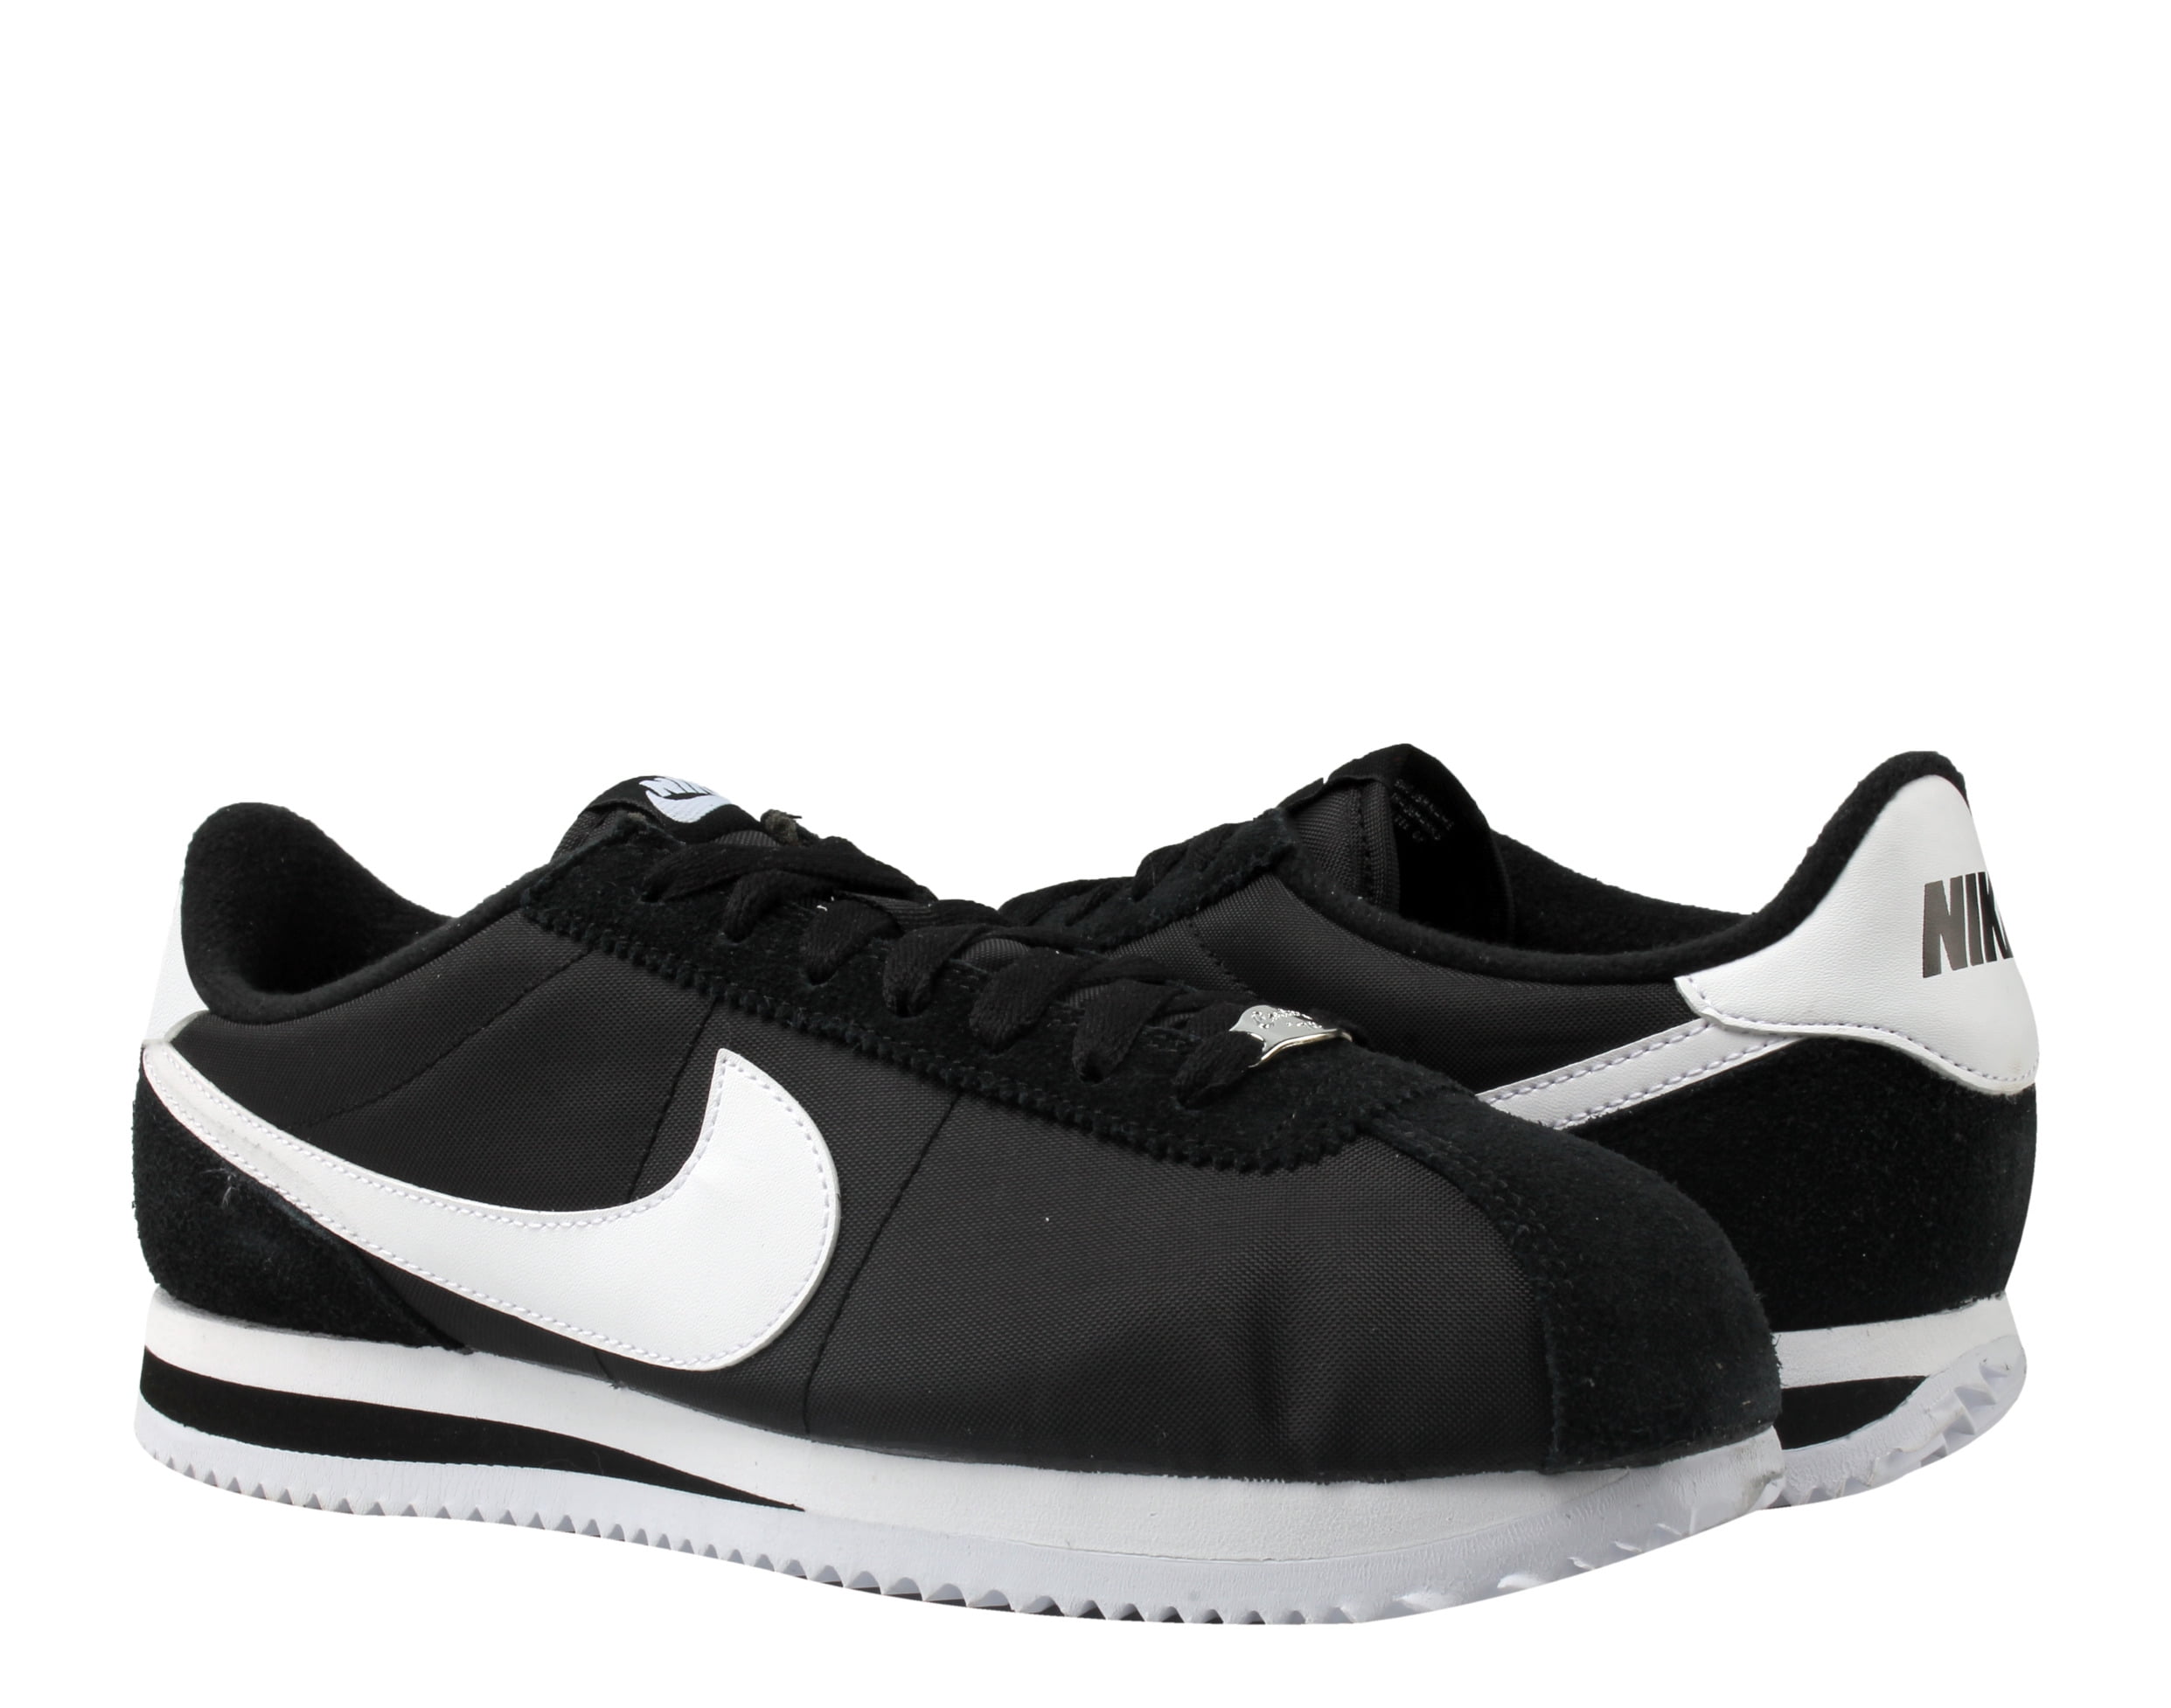 Nike Cortez Basic Nylon Lifestyle Casual Fashion Sneakers - Walmart.com